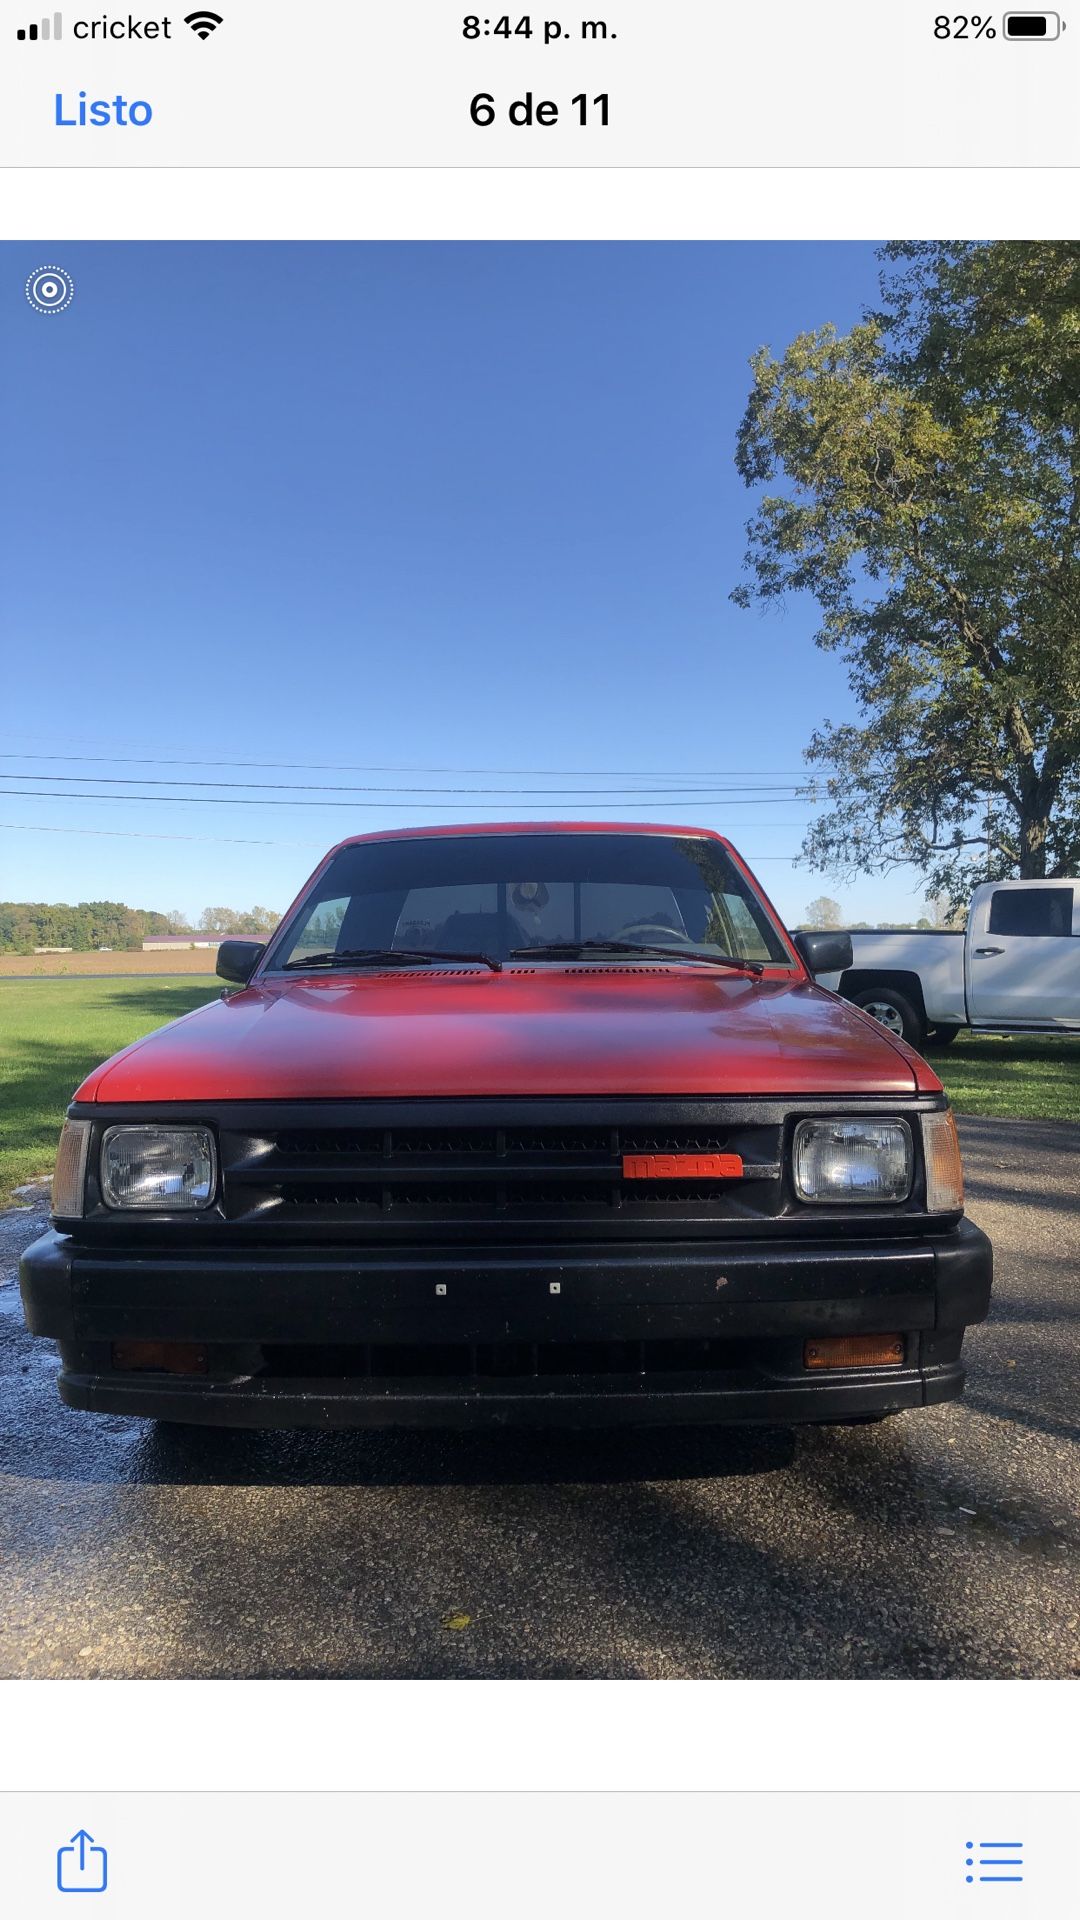 1990 Mazda B-Series Pickup